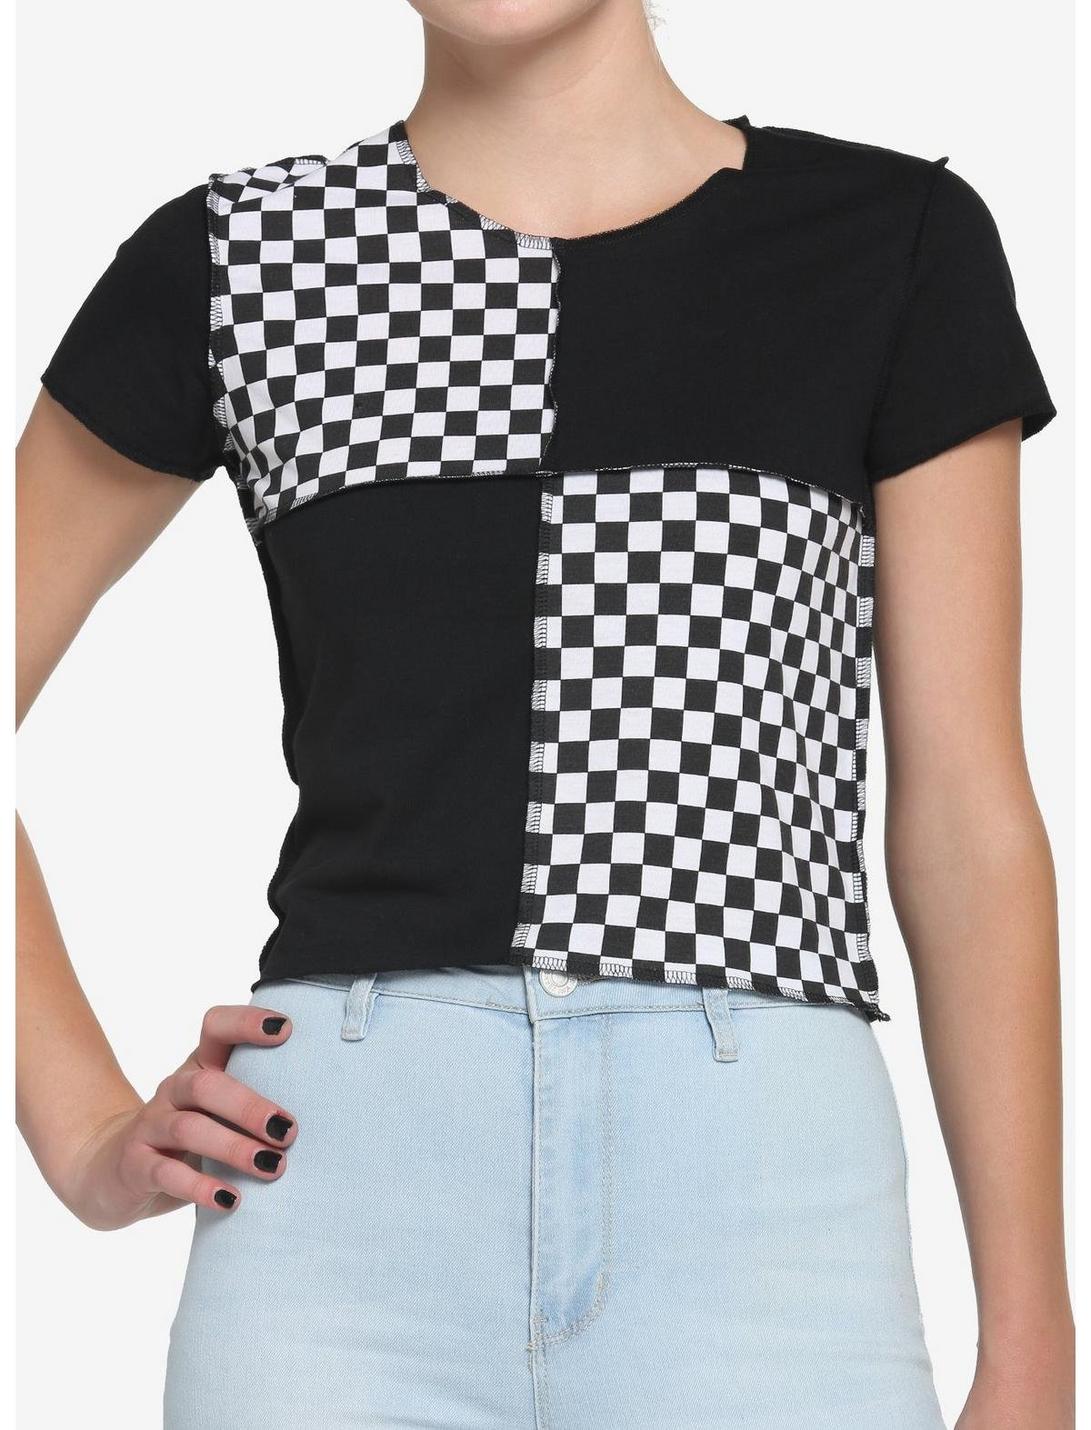 Black & White Checkered Color-Block Girls Baby T-Shirt, BLACK-WHITE, hi-res